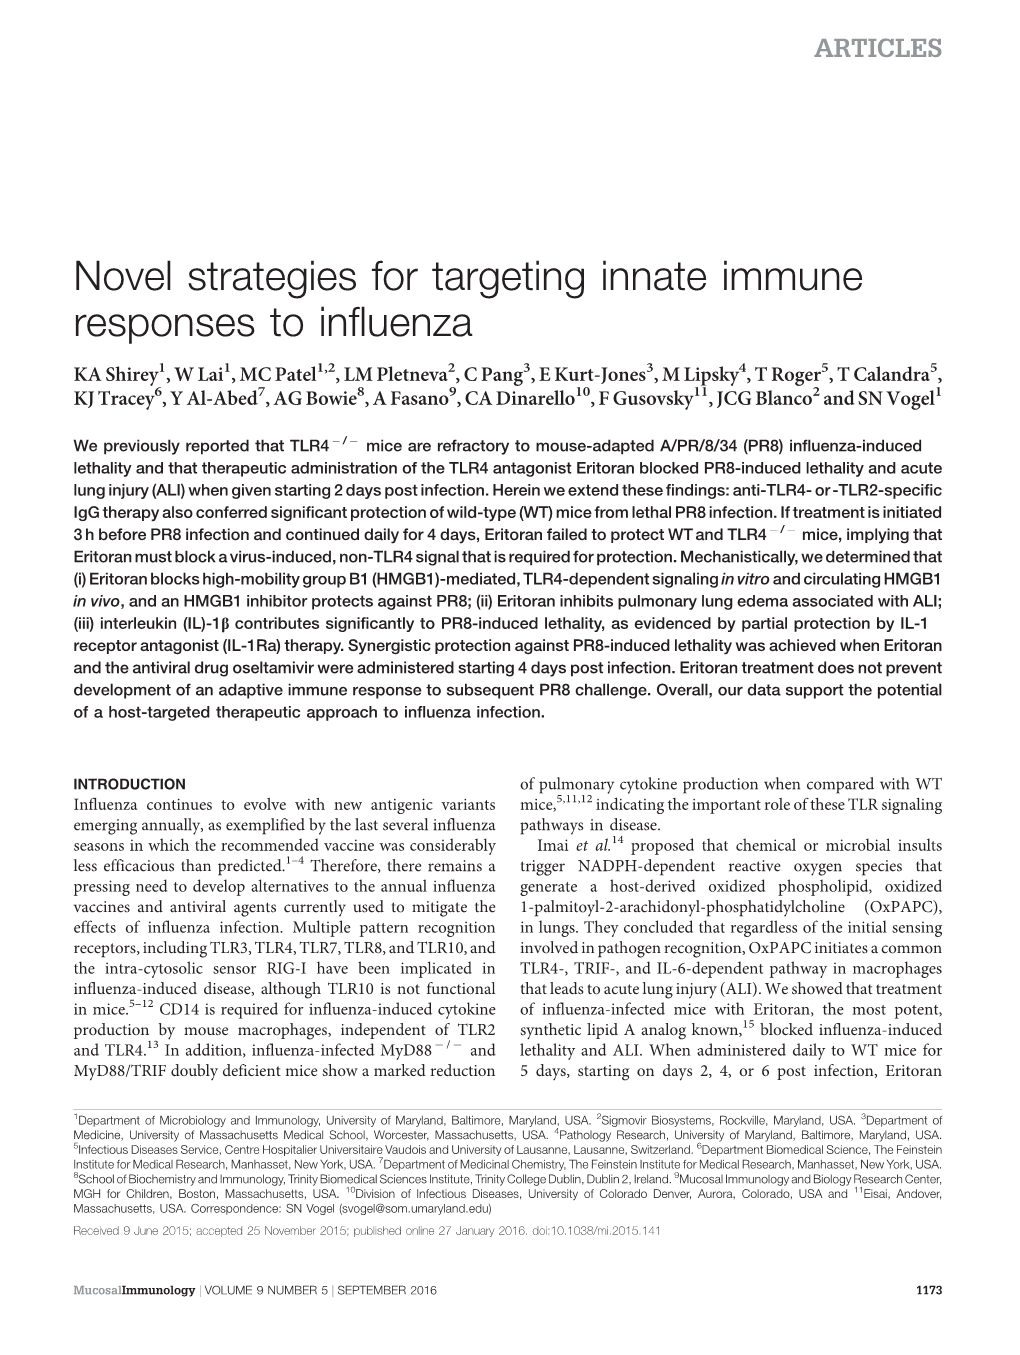 Novel Strategies for Targeting Innate Immune Responses to Influenza